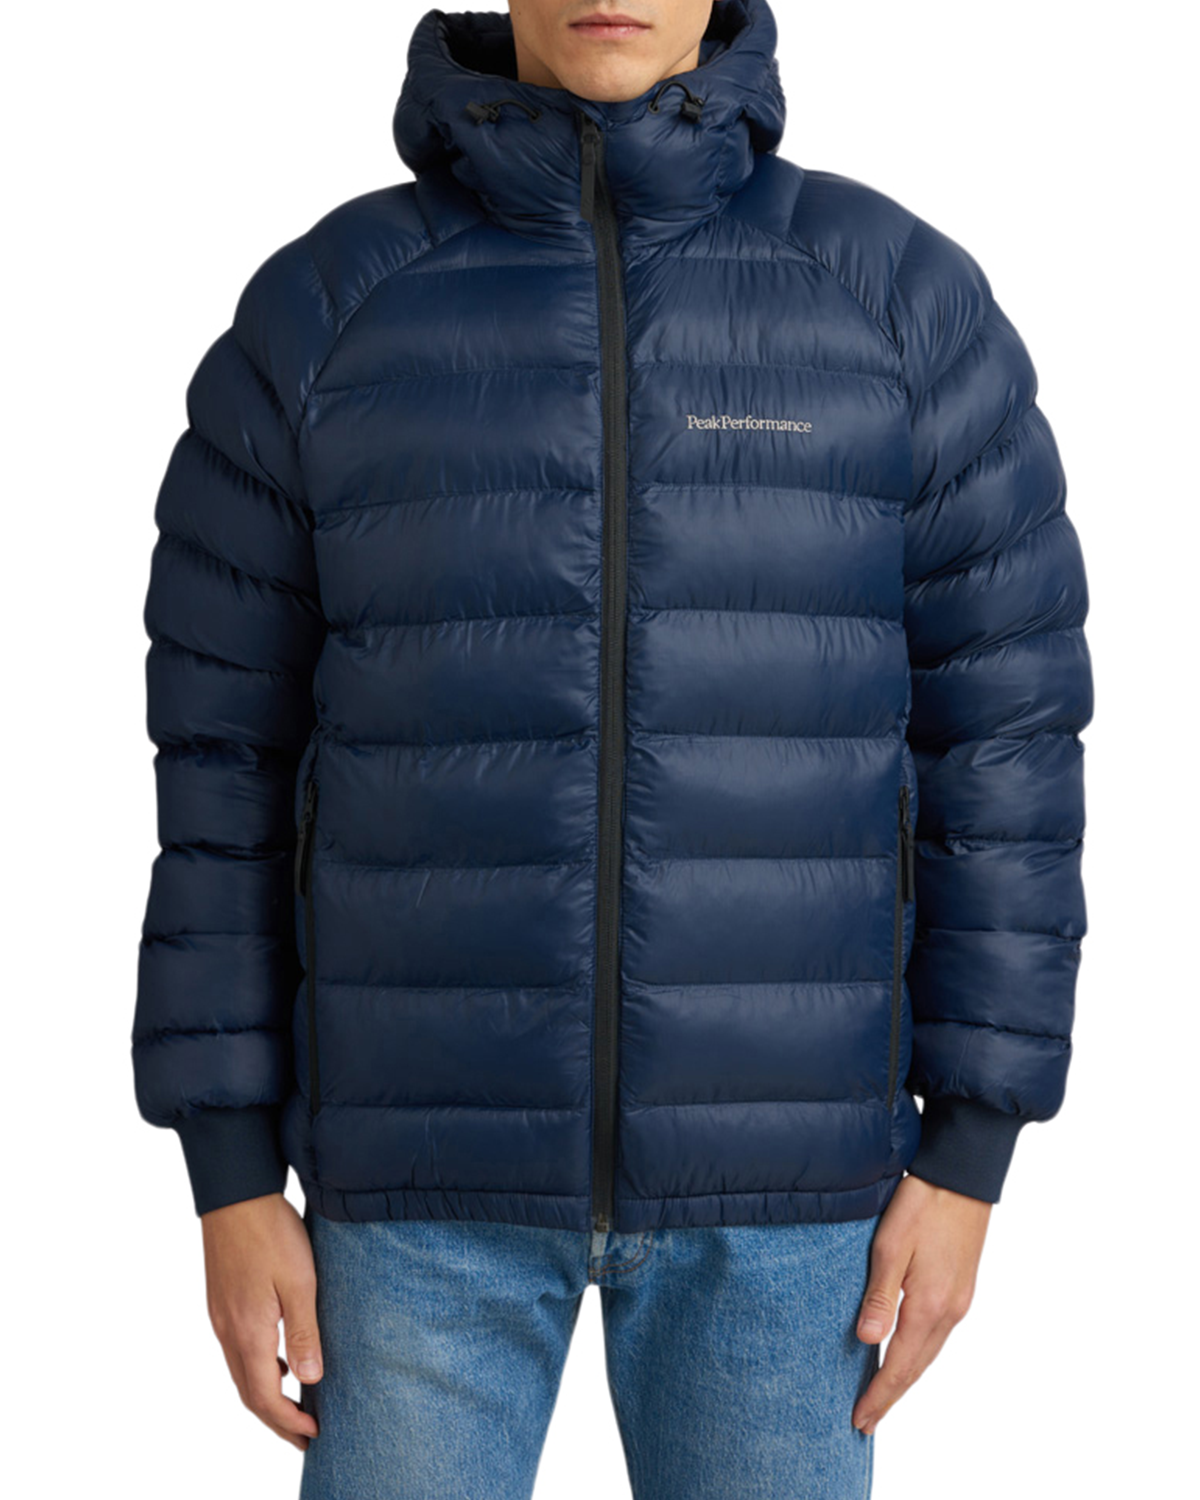 peak-performance-m-tomic-insulated-hood-jacket-1.png